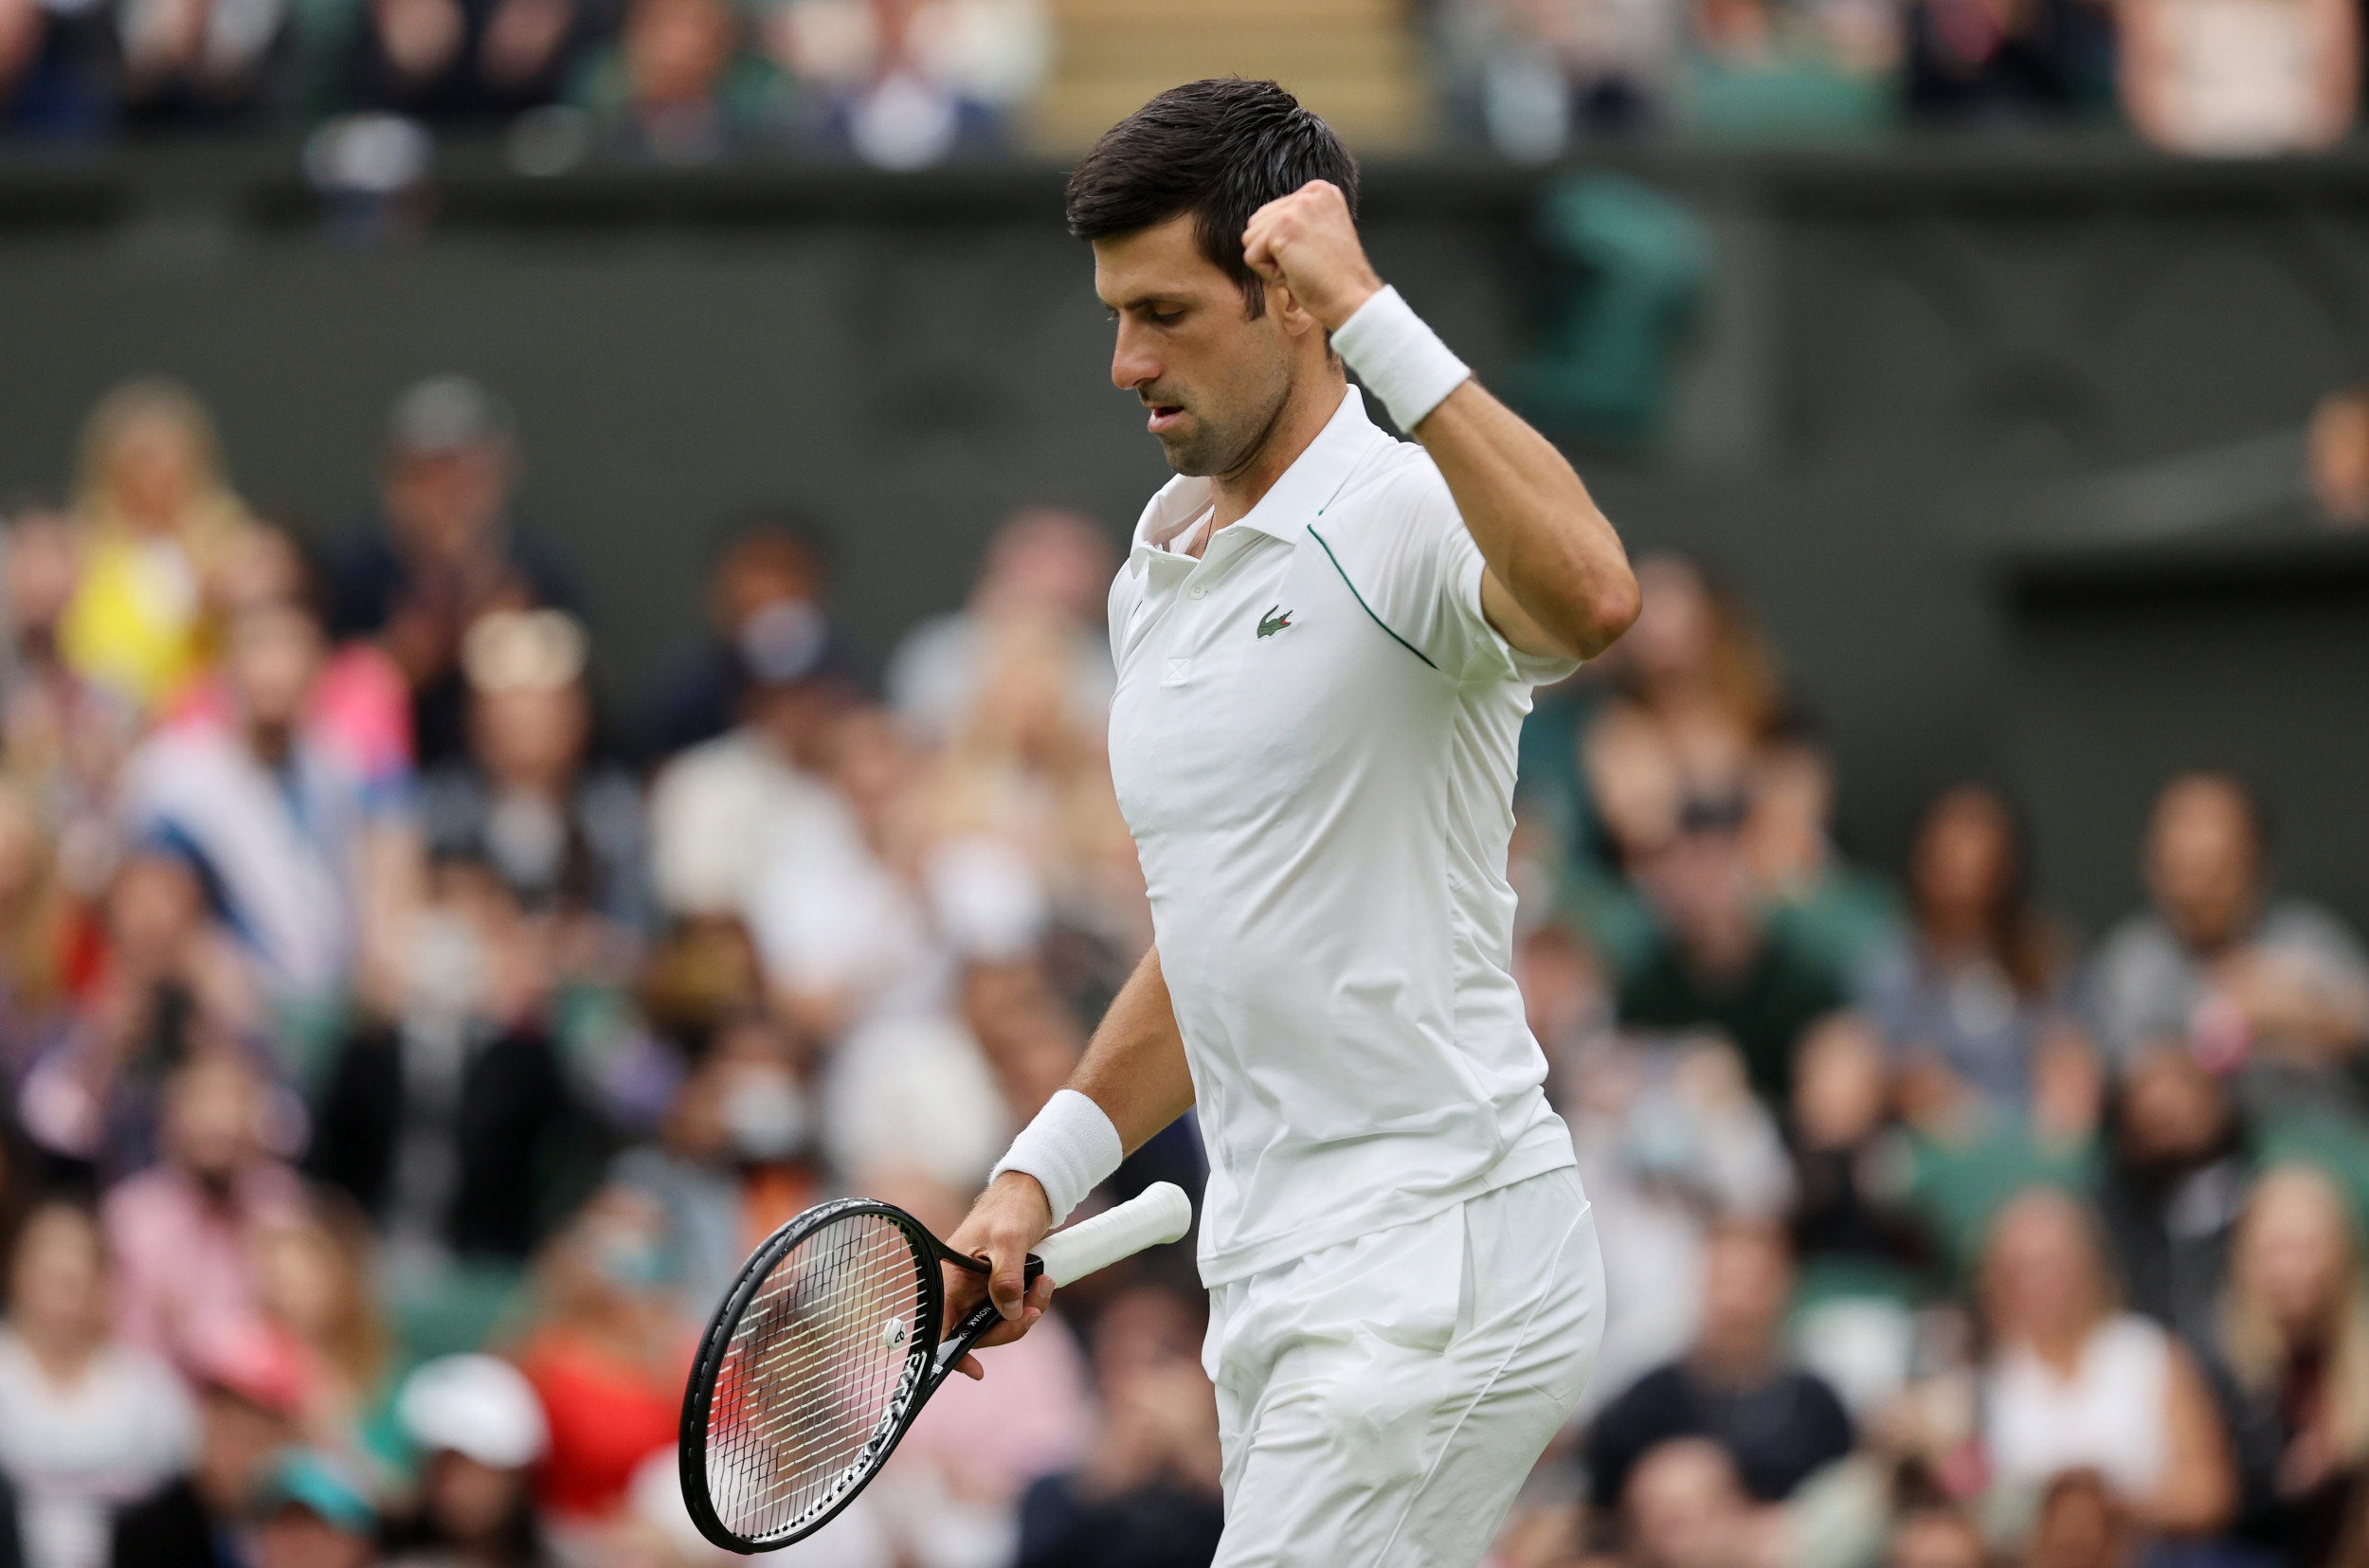 Wimbledon 2021 How to Watch, Stream Novak Djokovic, Frances Tiafoe Second-Round Matches